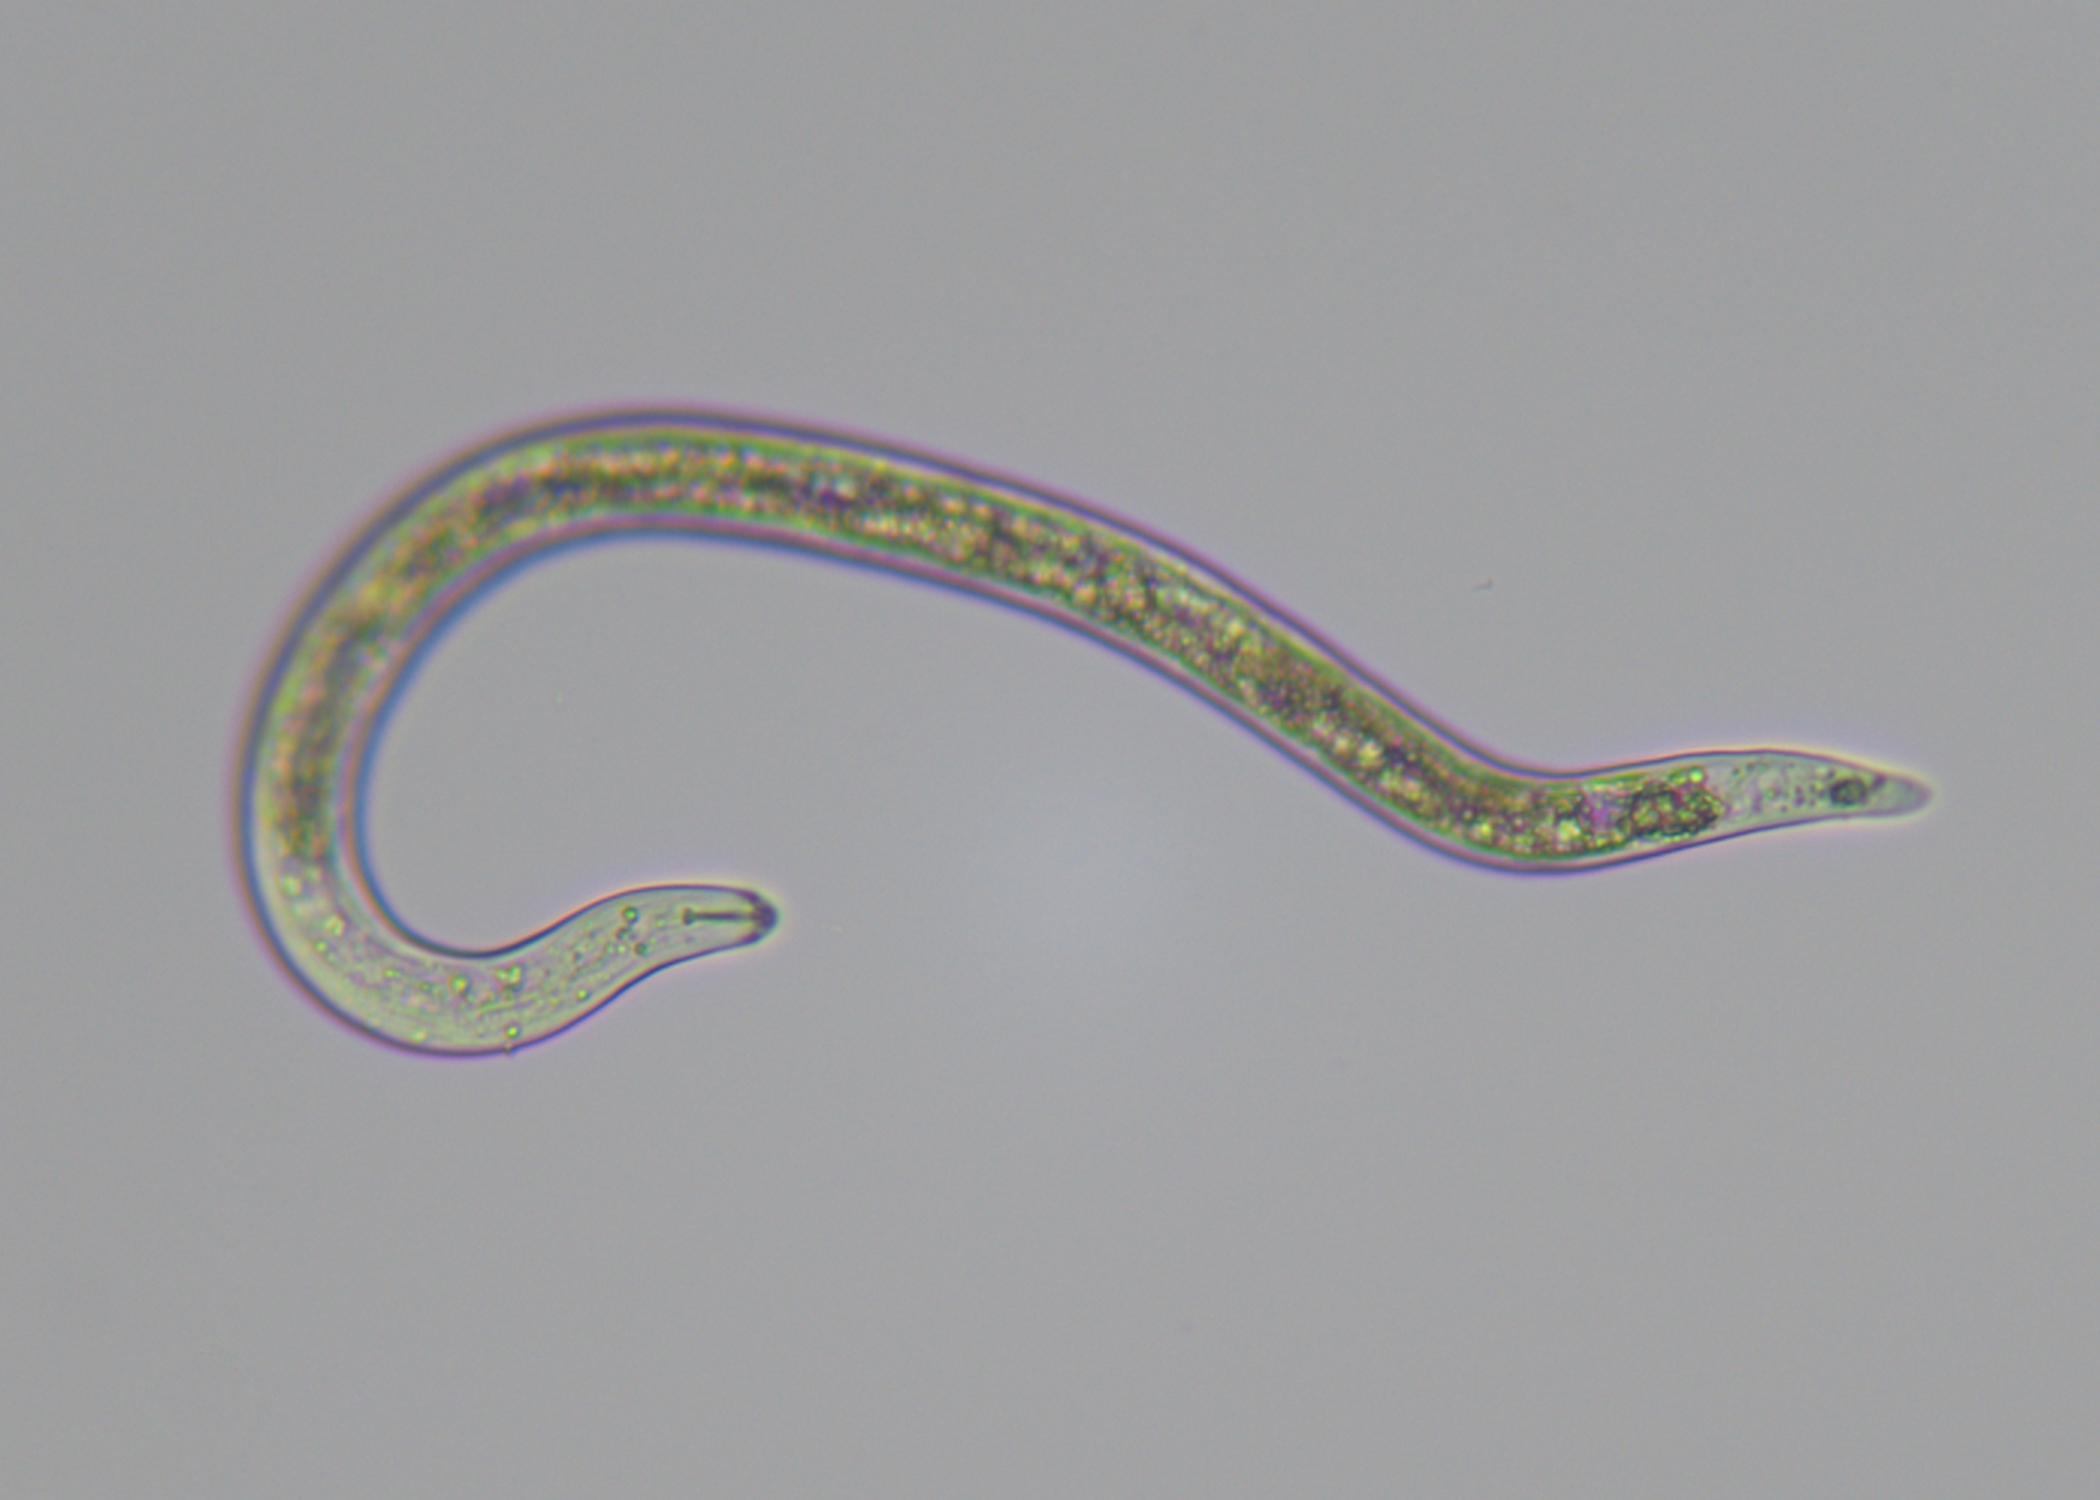 Image shows a transparent, worm-like creature.